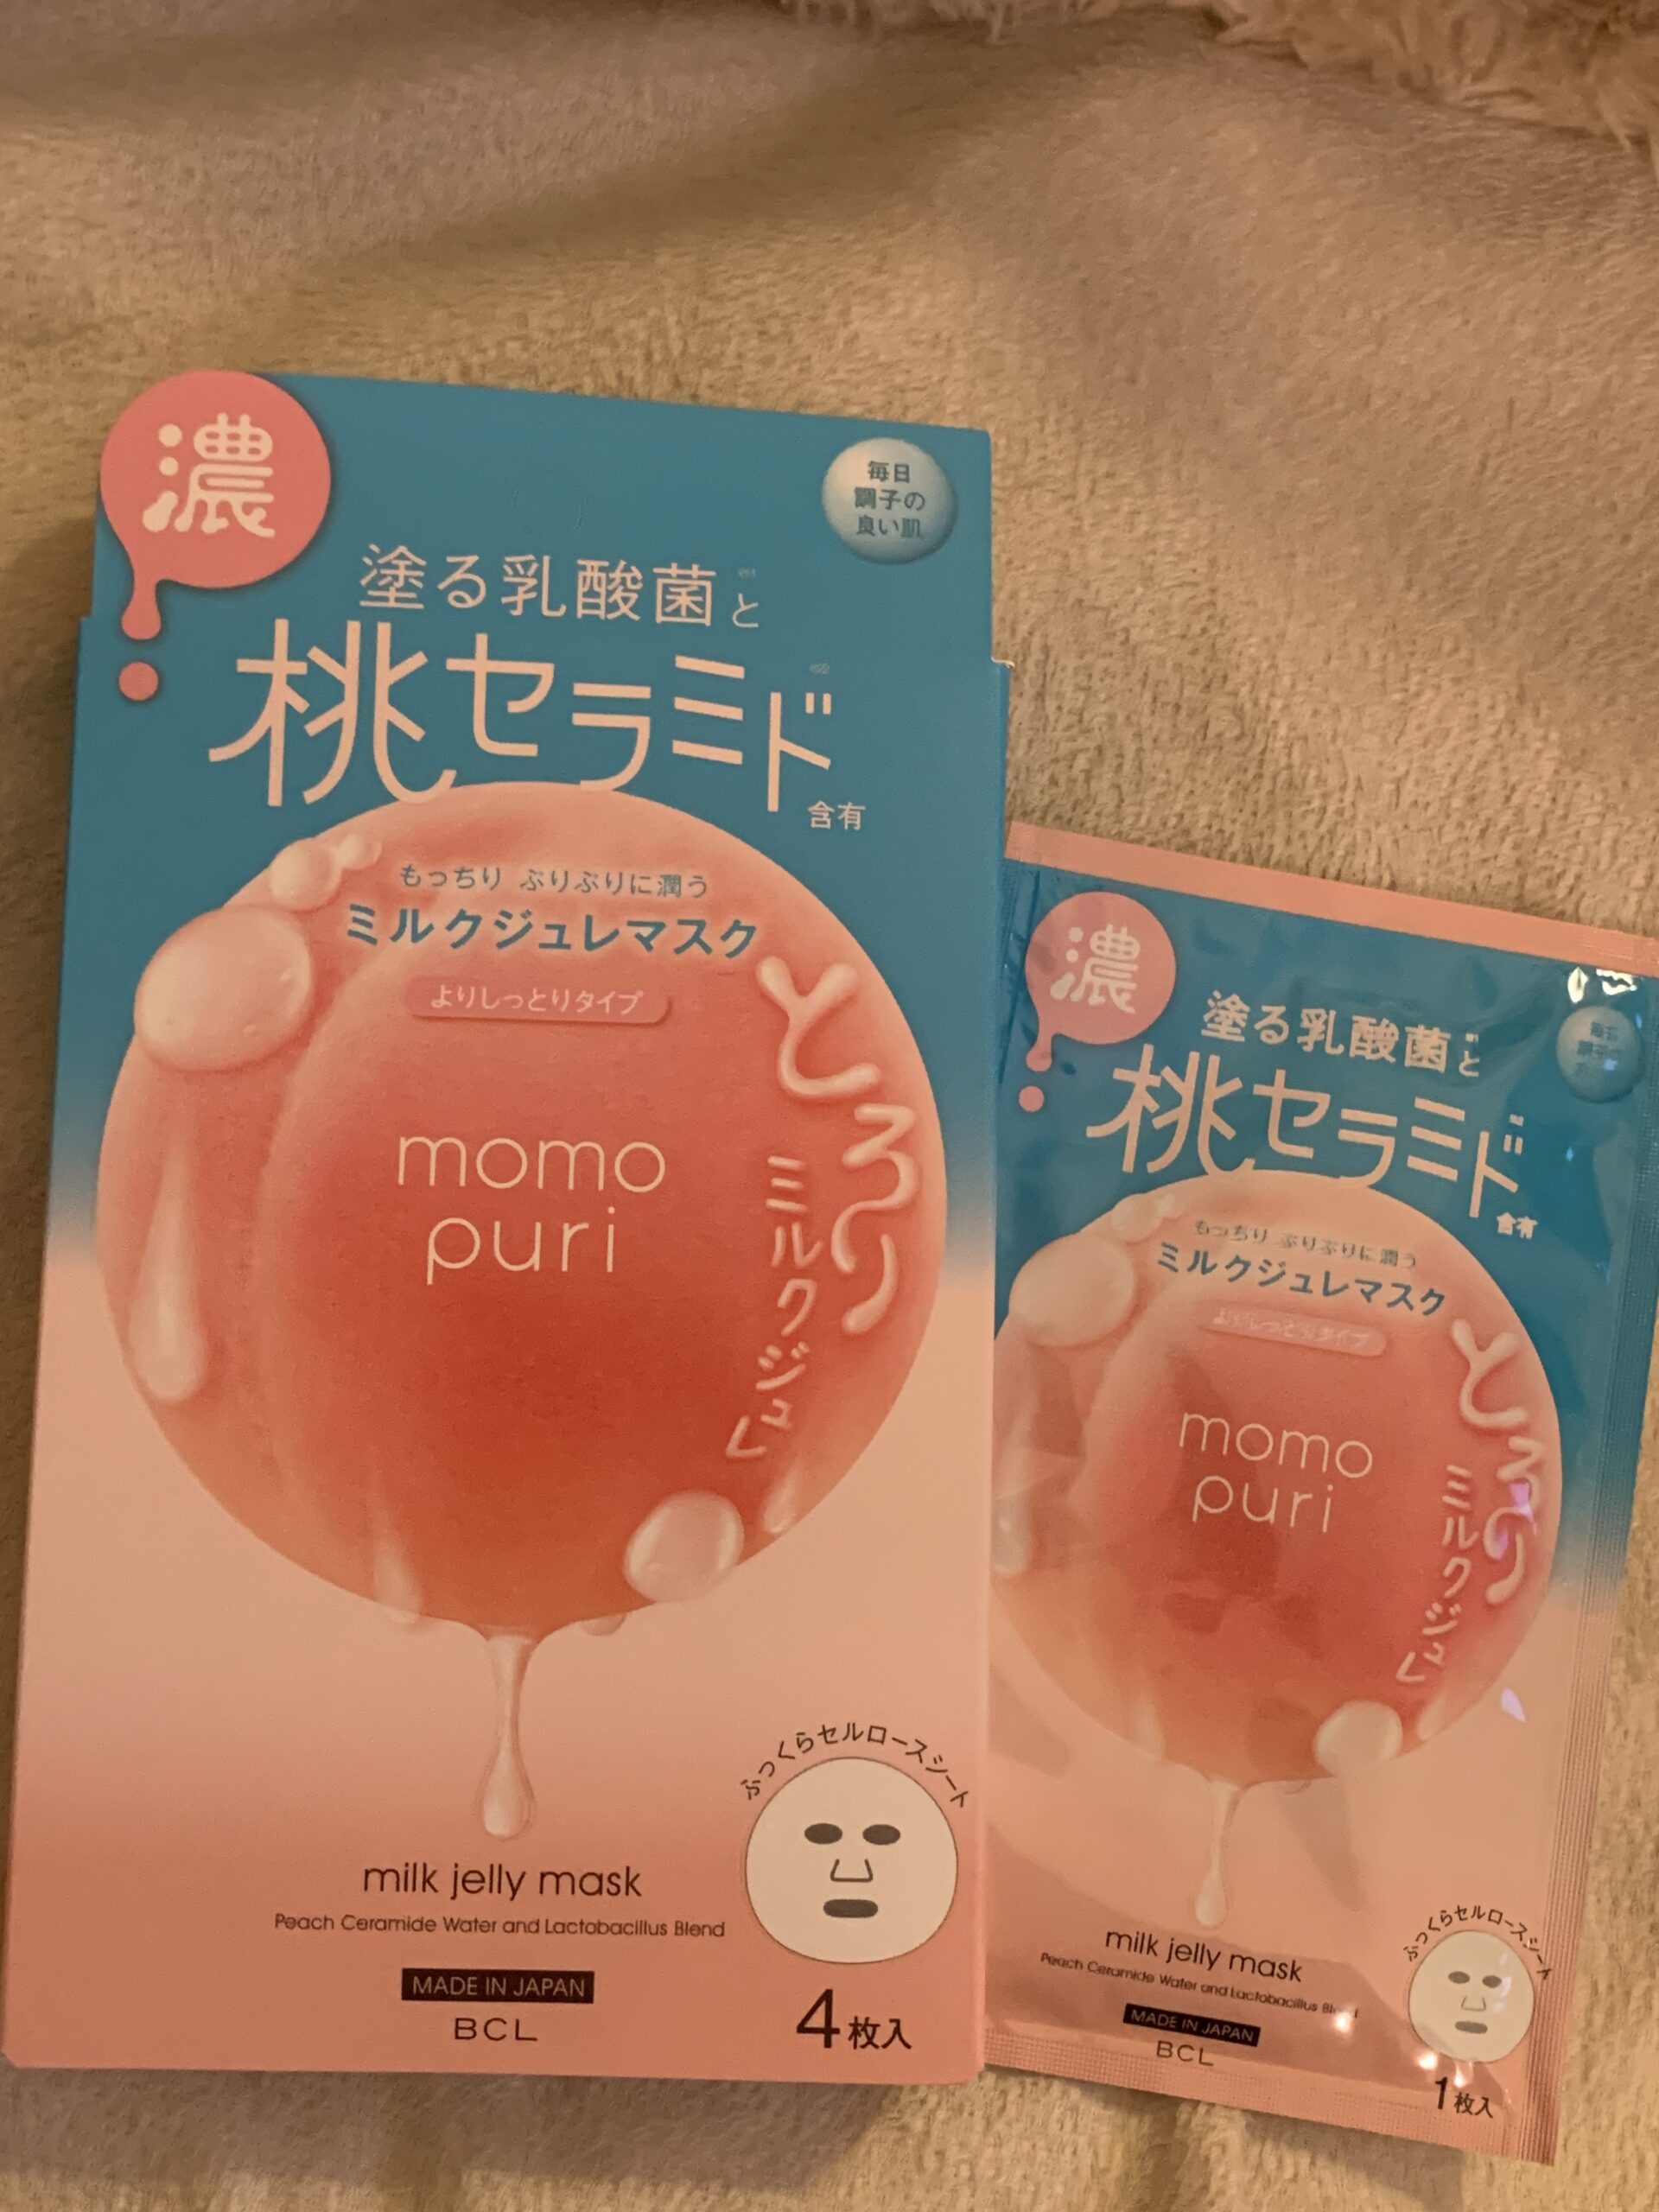 Momo puri Milk jelly mask